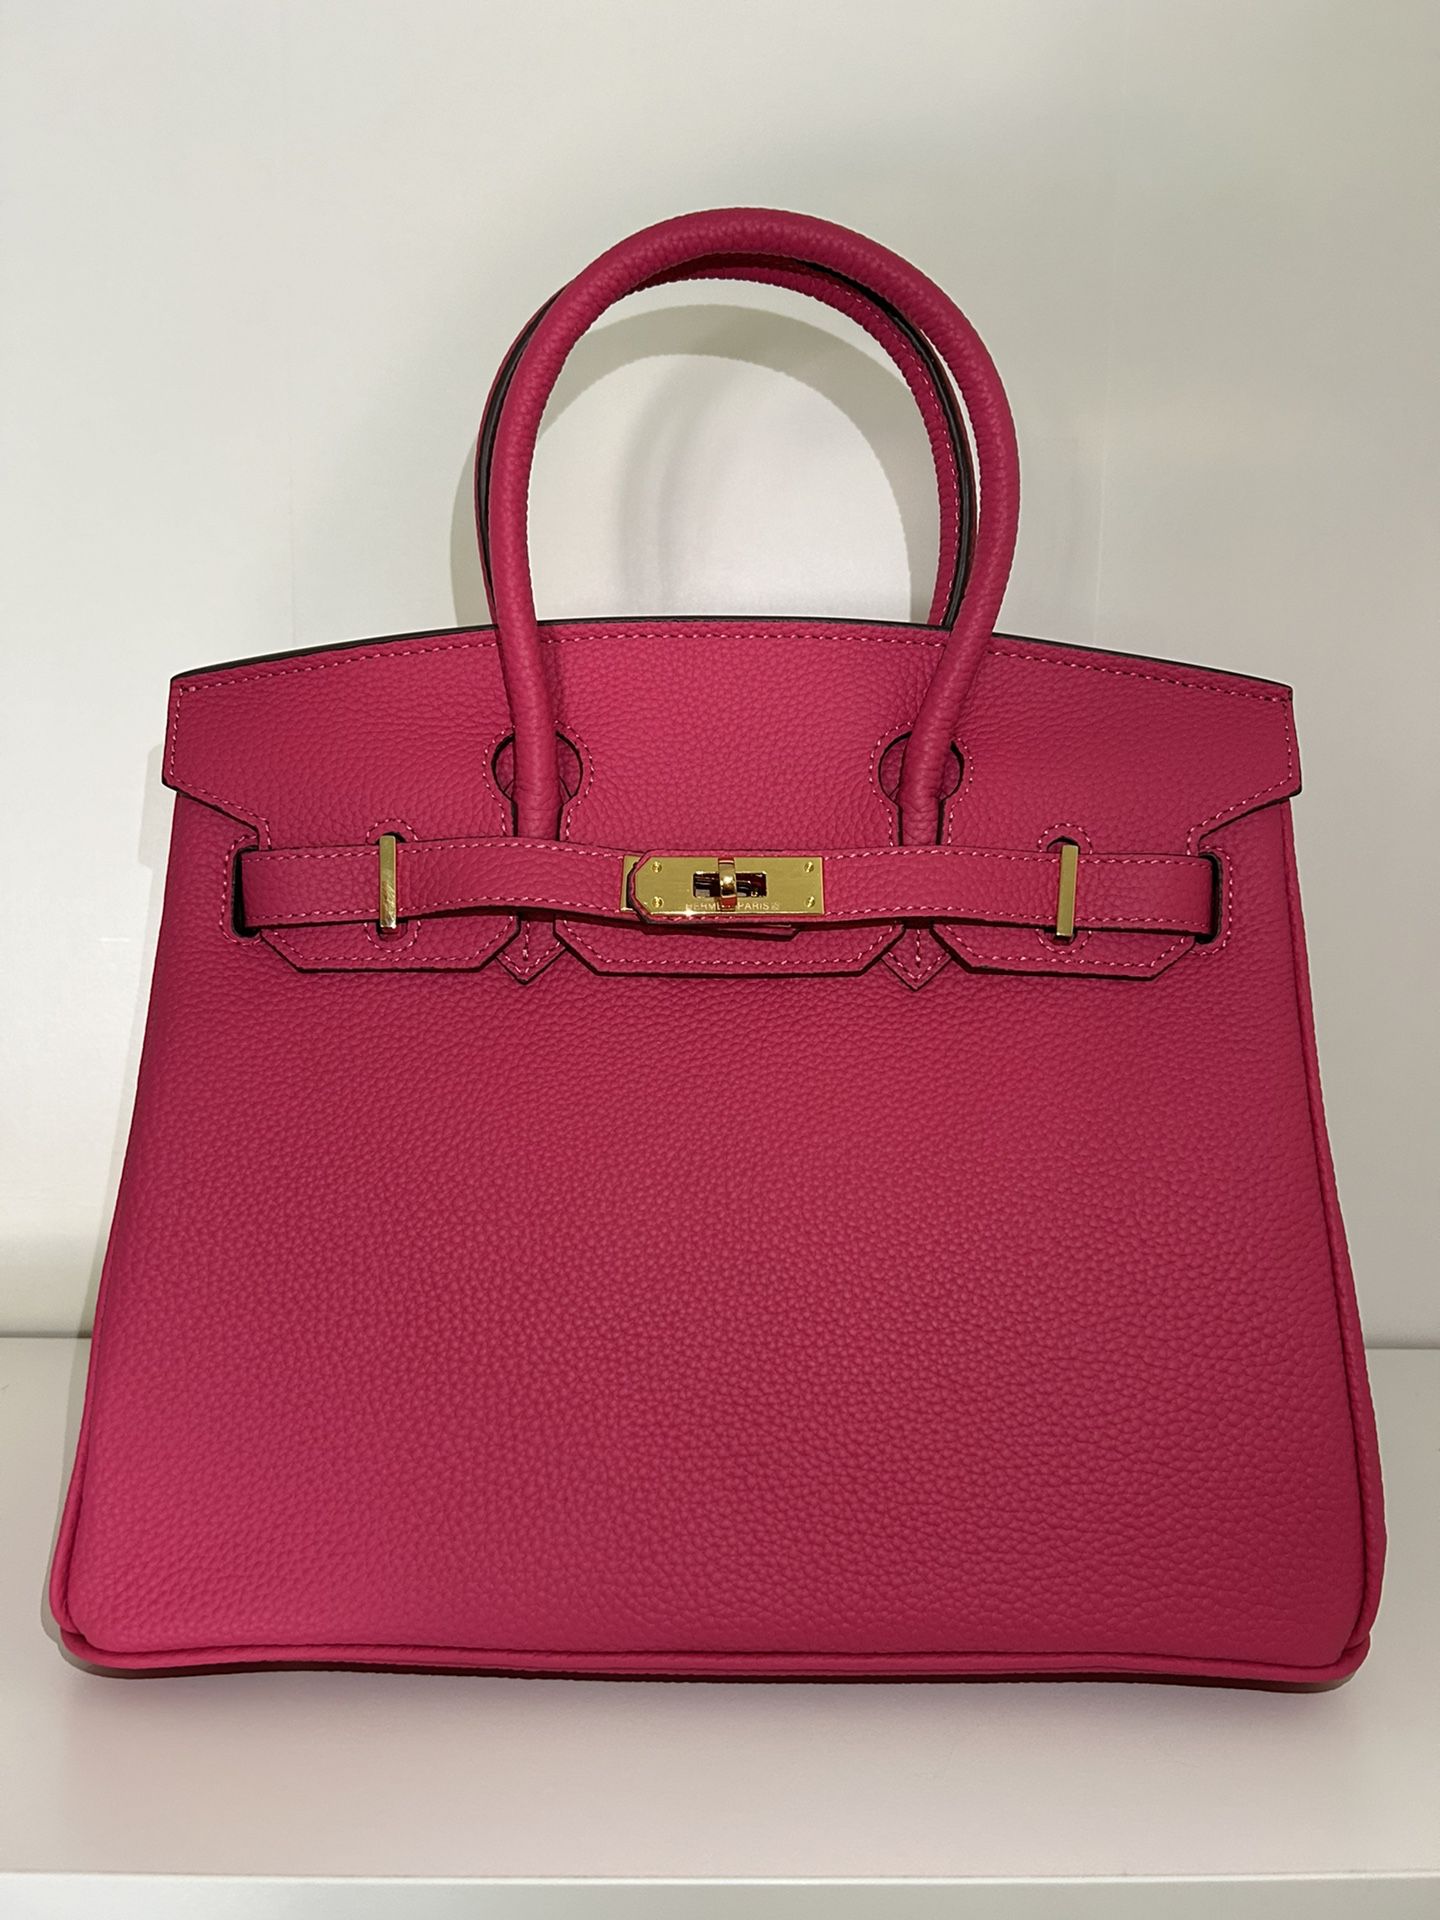 Pink Birkin Bag Exclusive Woman’s Bag H 